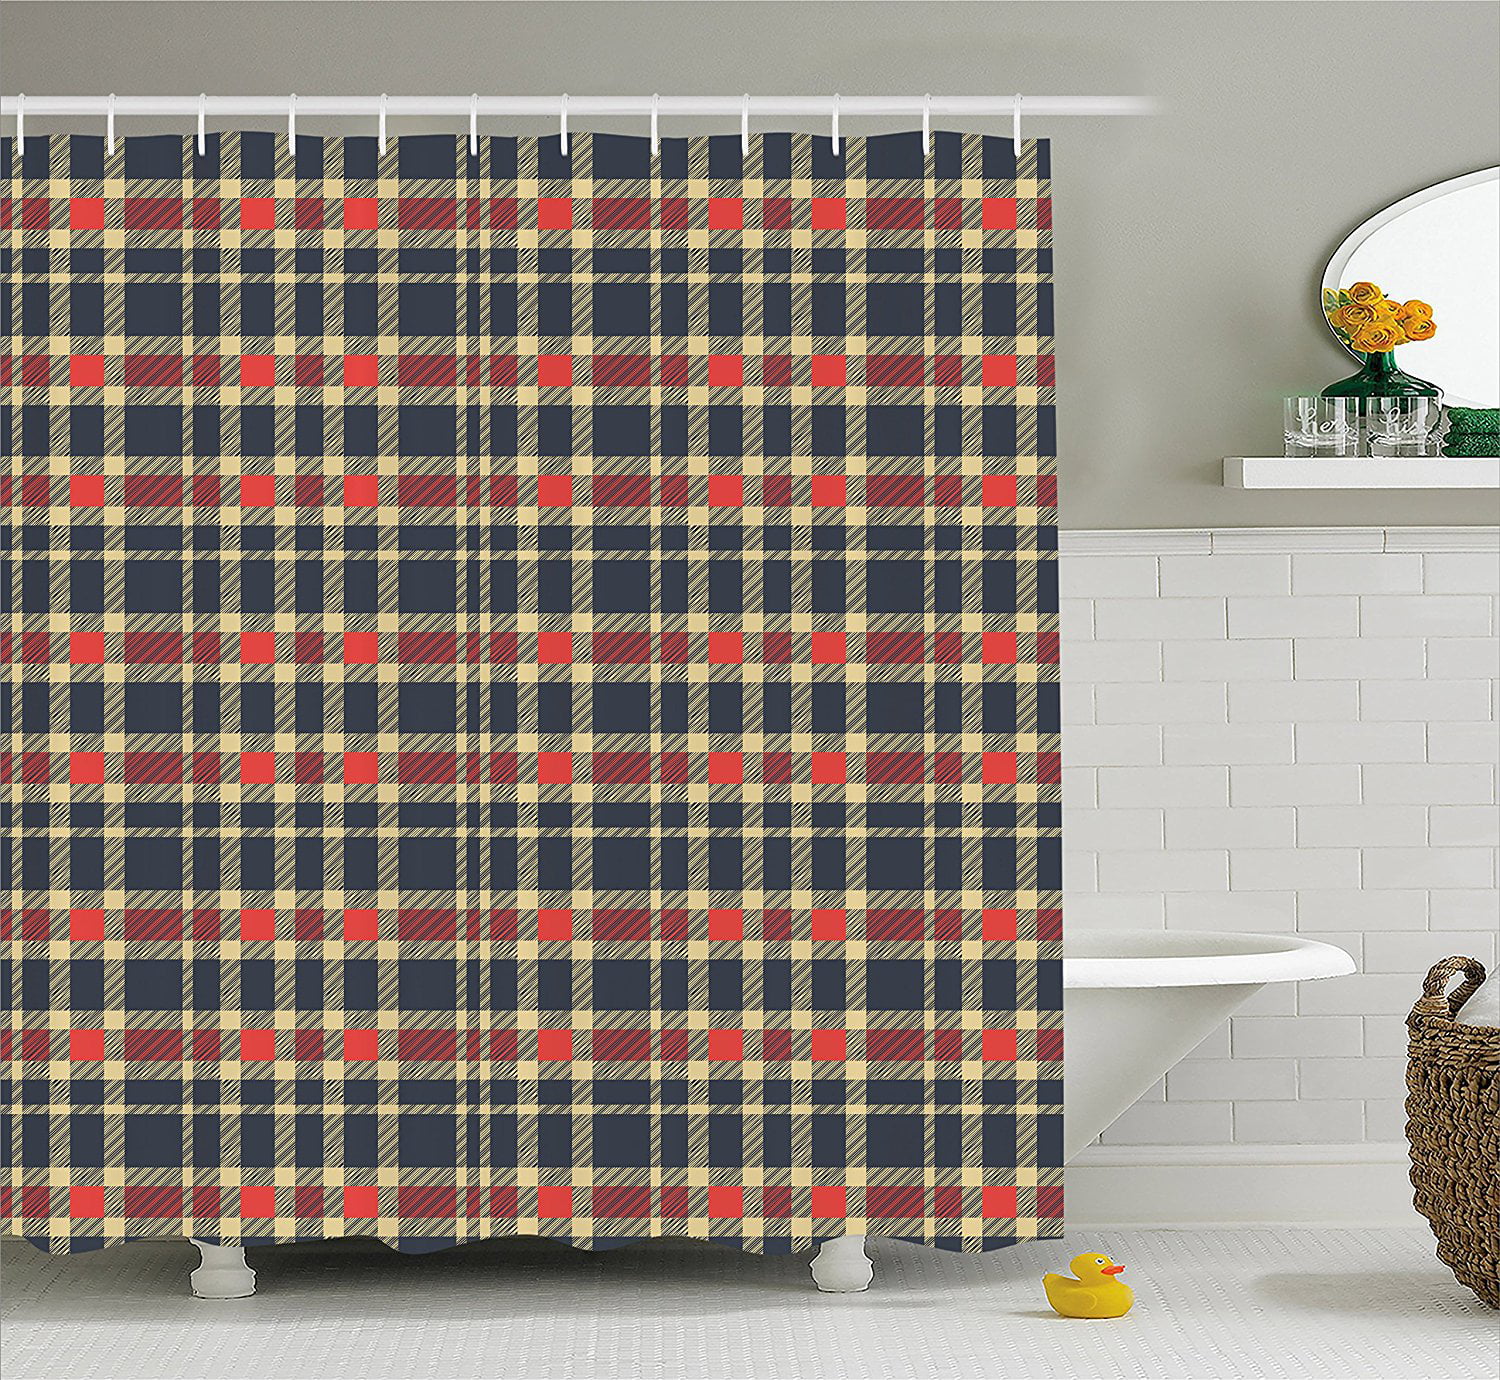 Retro Shower Curtain By Geometric, Plaid Shower Curtains Fabric